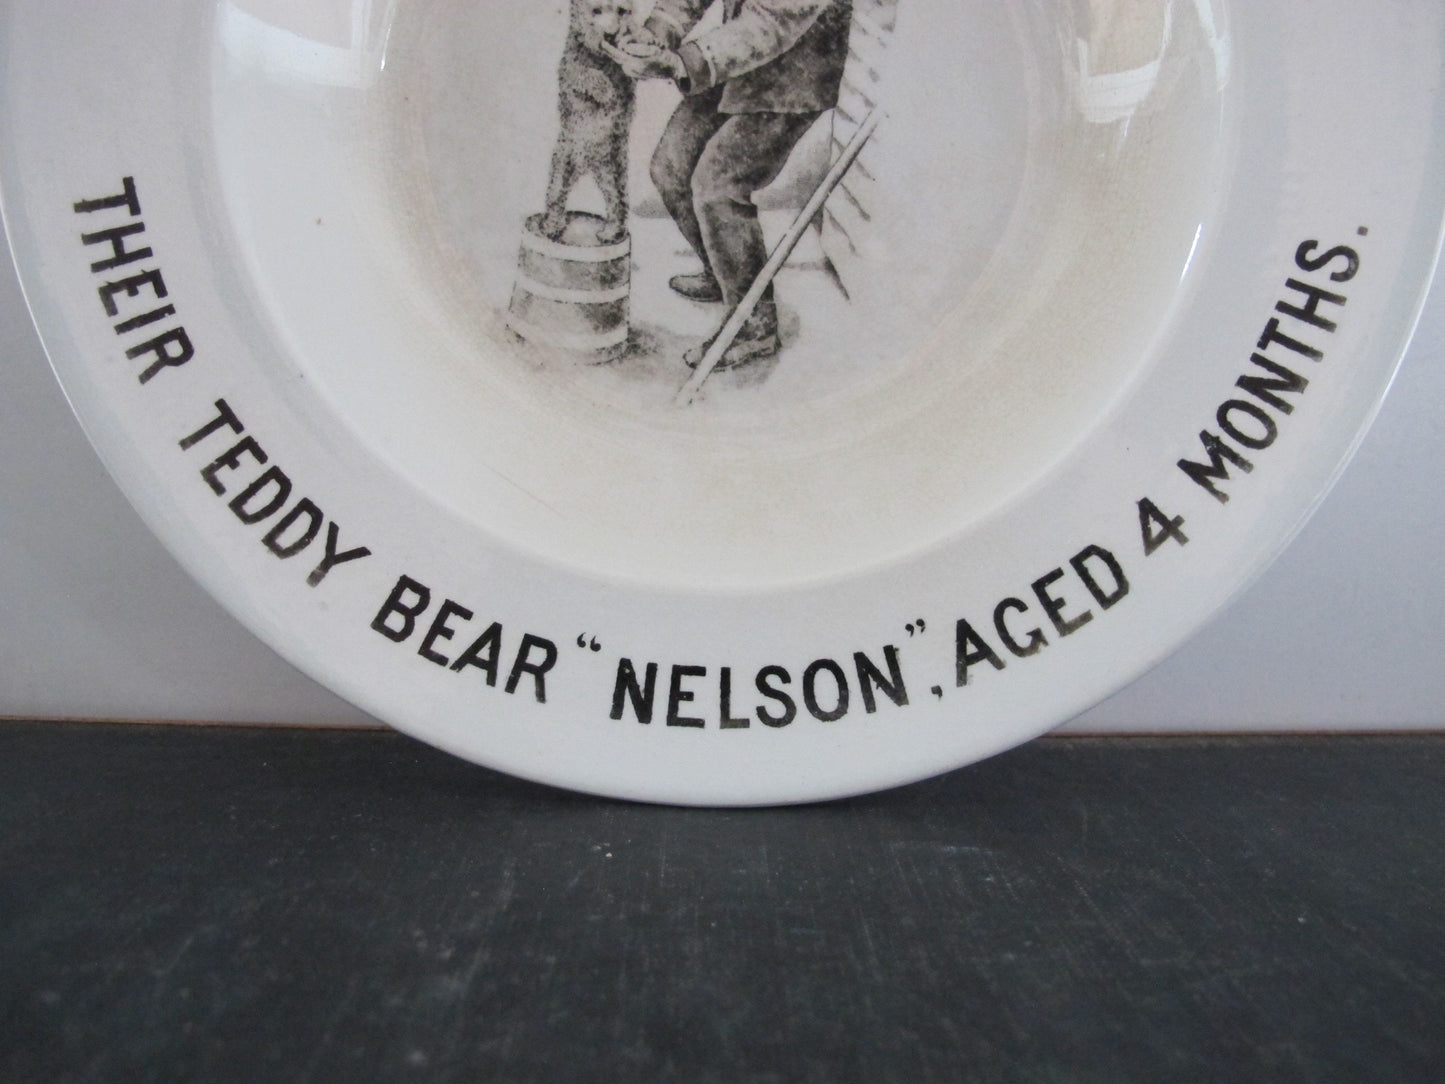 Bowl Plate Advertising Advertisement Bear Thomas Wallis and Co. Edwardian Victorian 1902 1900s